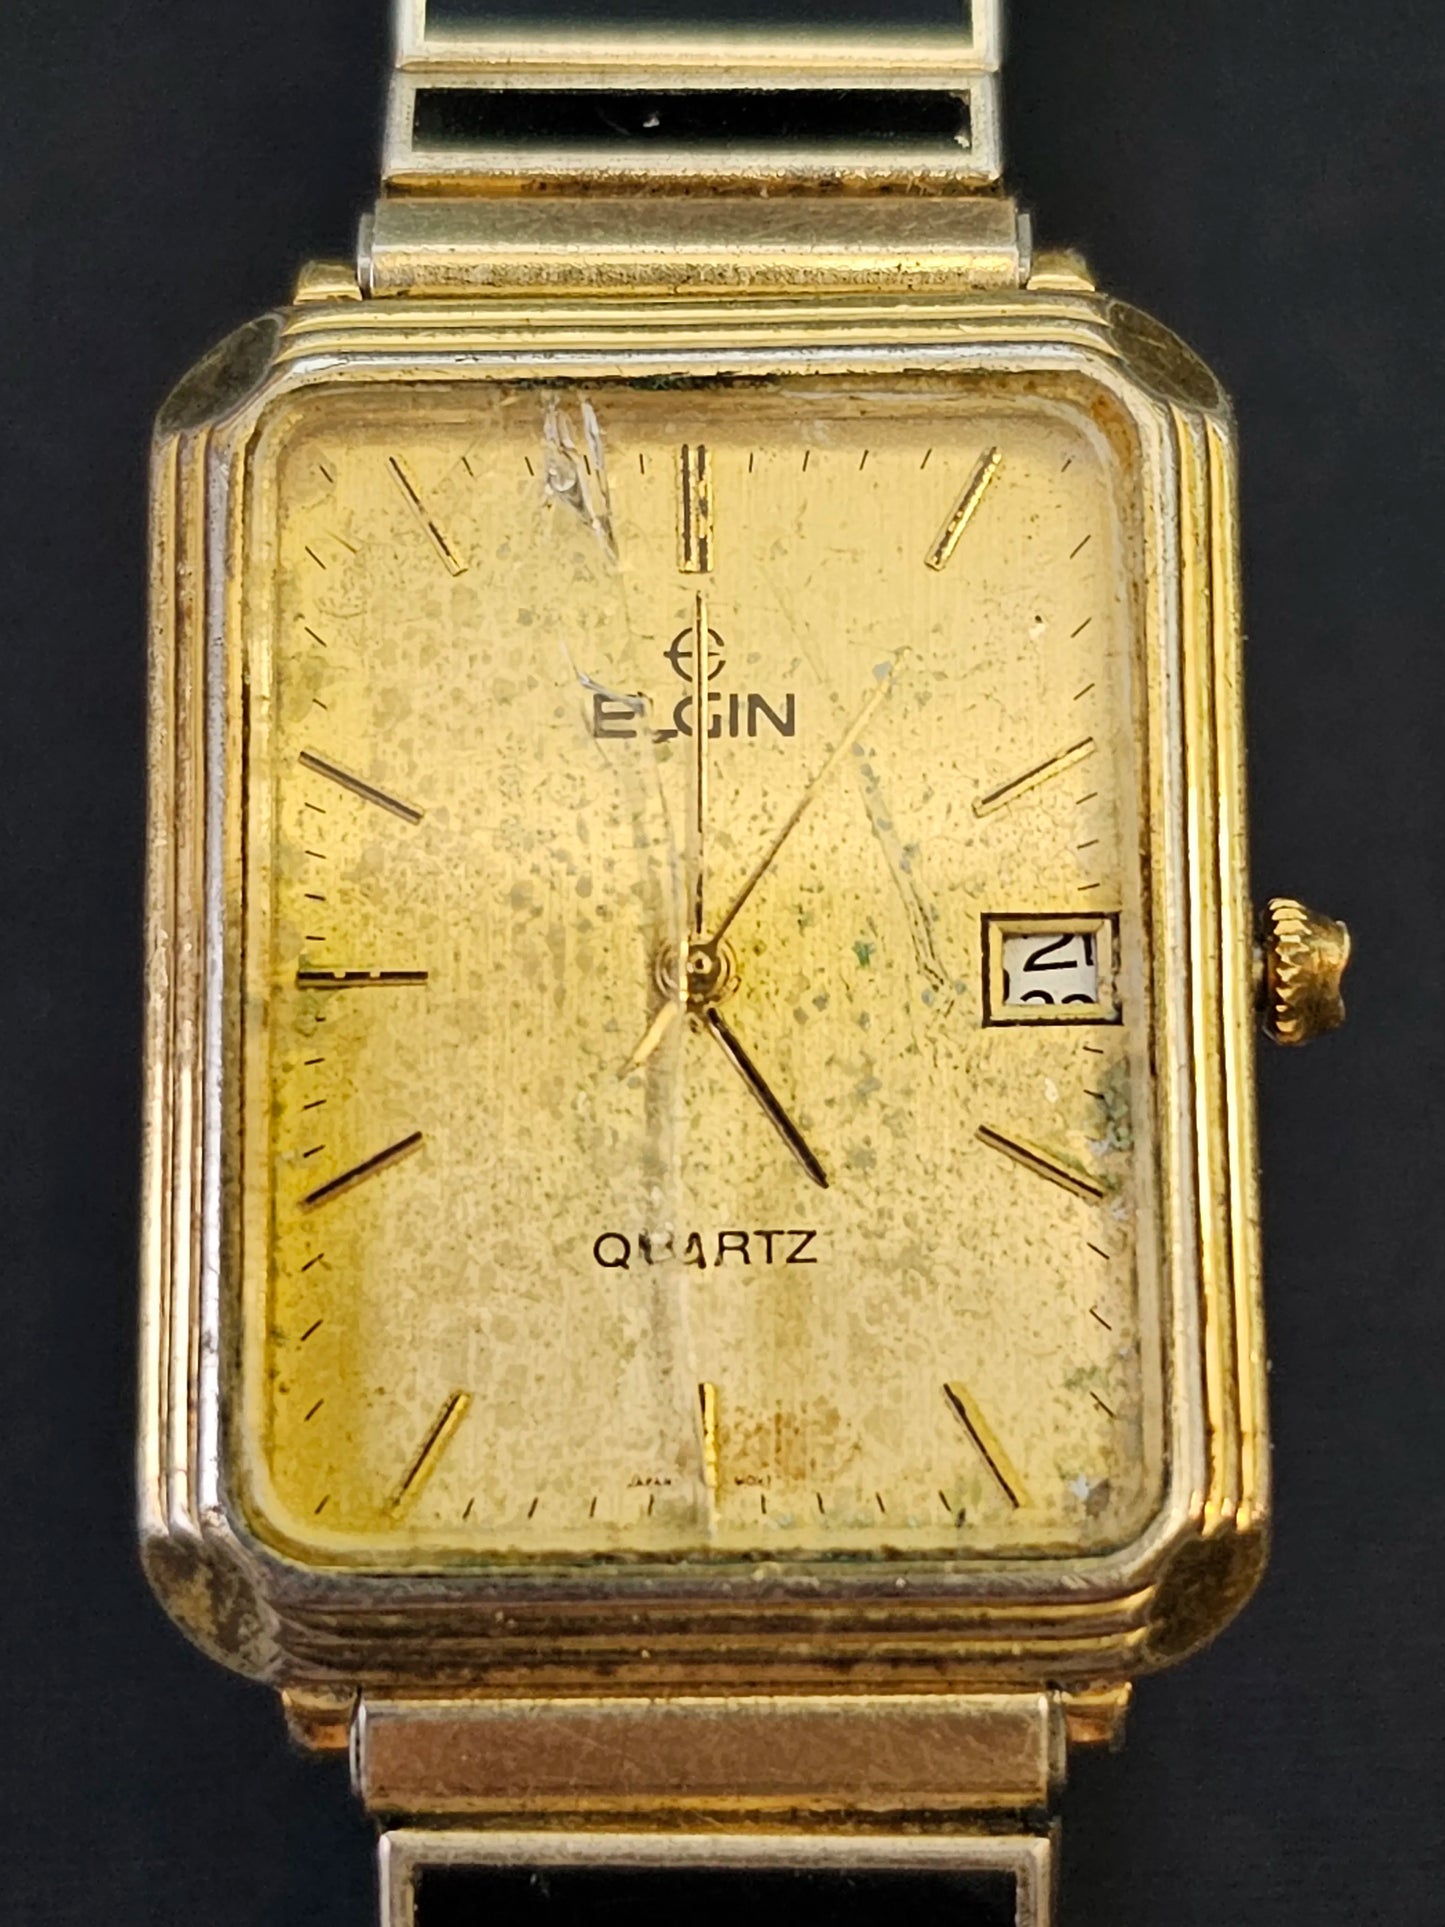 Elgin - Gold tone watch